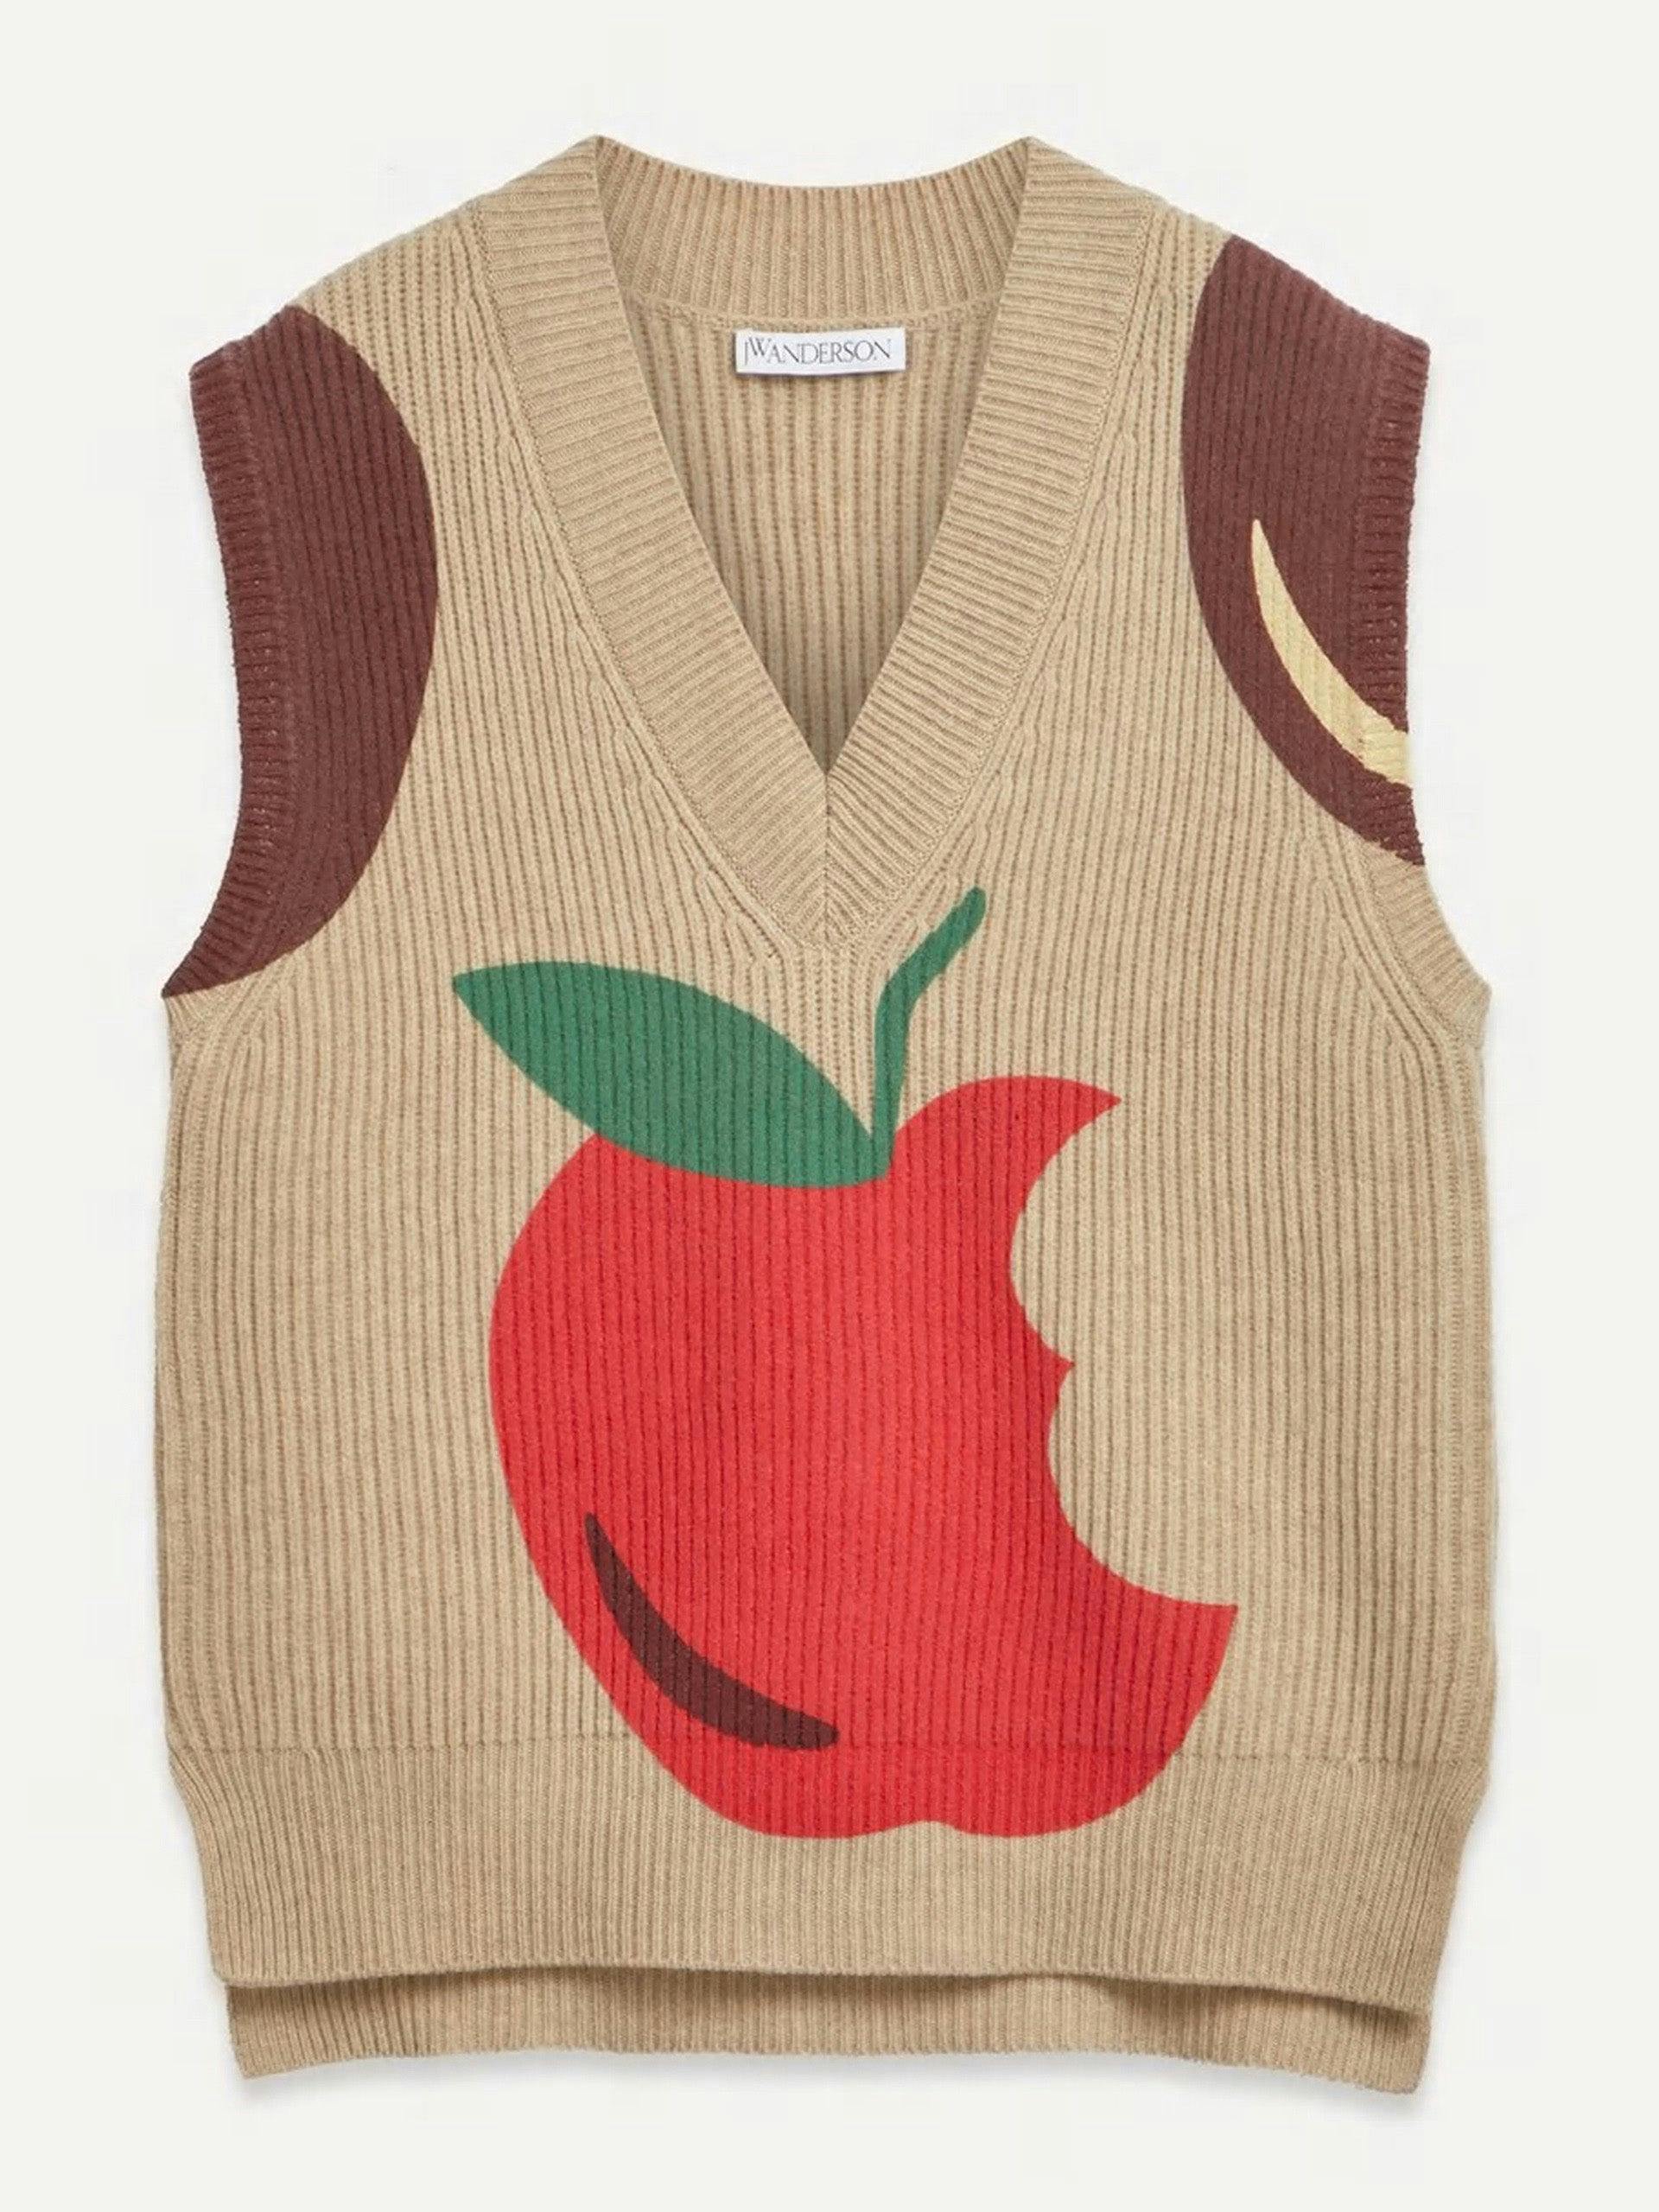 Knitted Apple vest